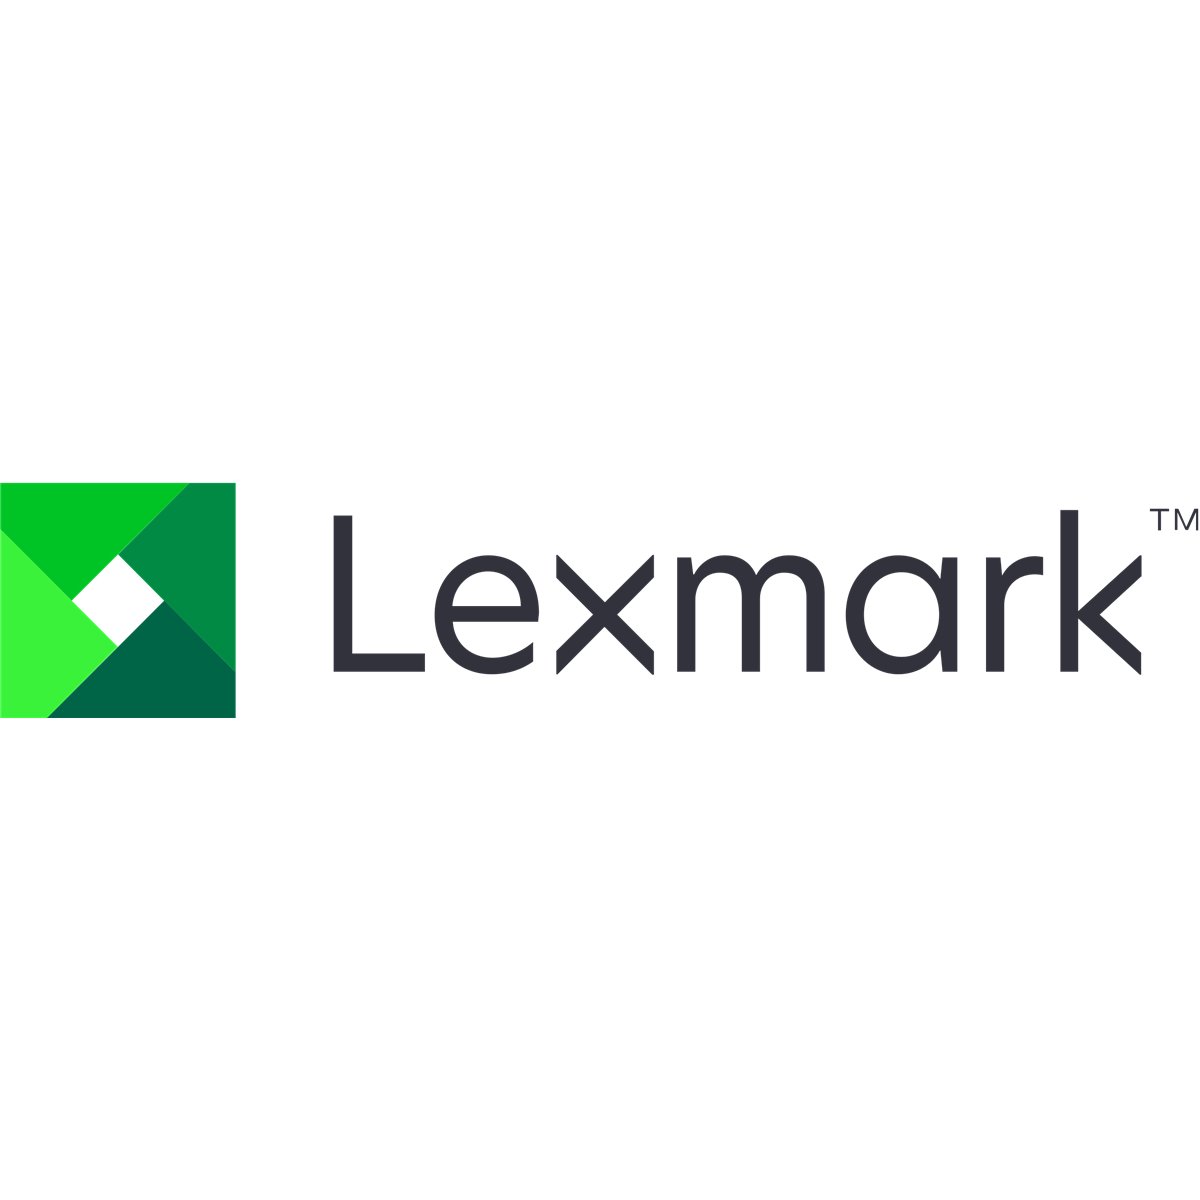 Lexmark Tray Insert 550 sheet media H